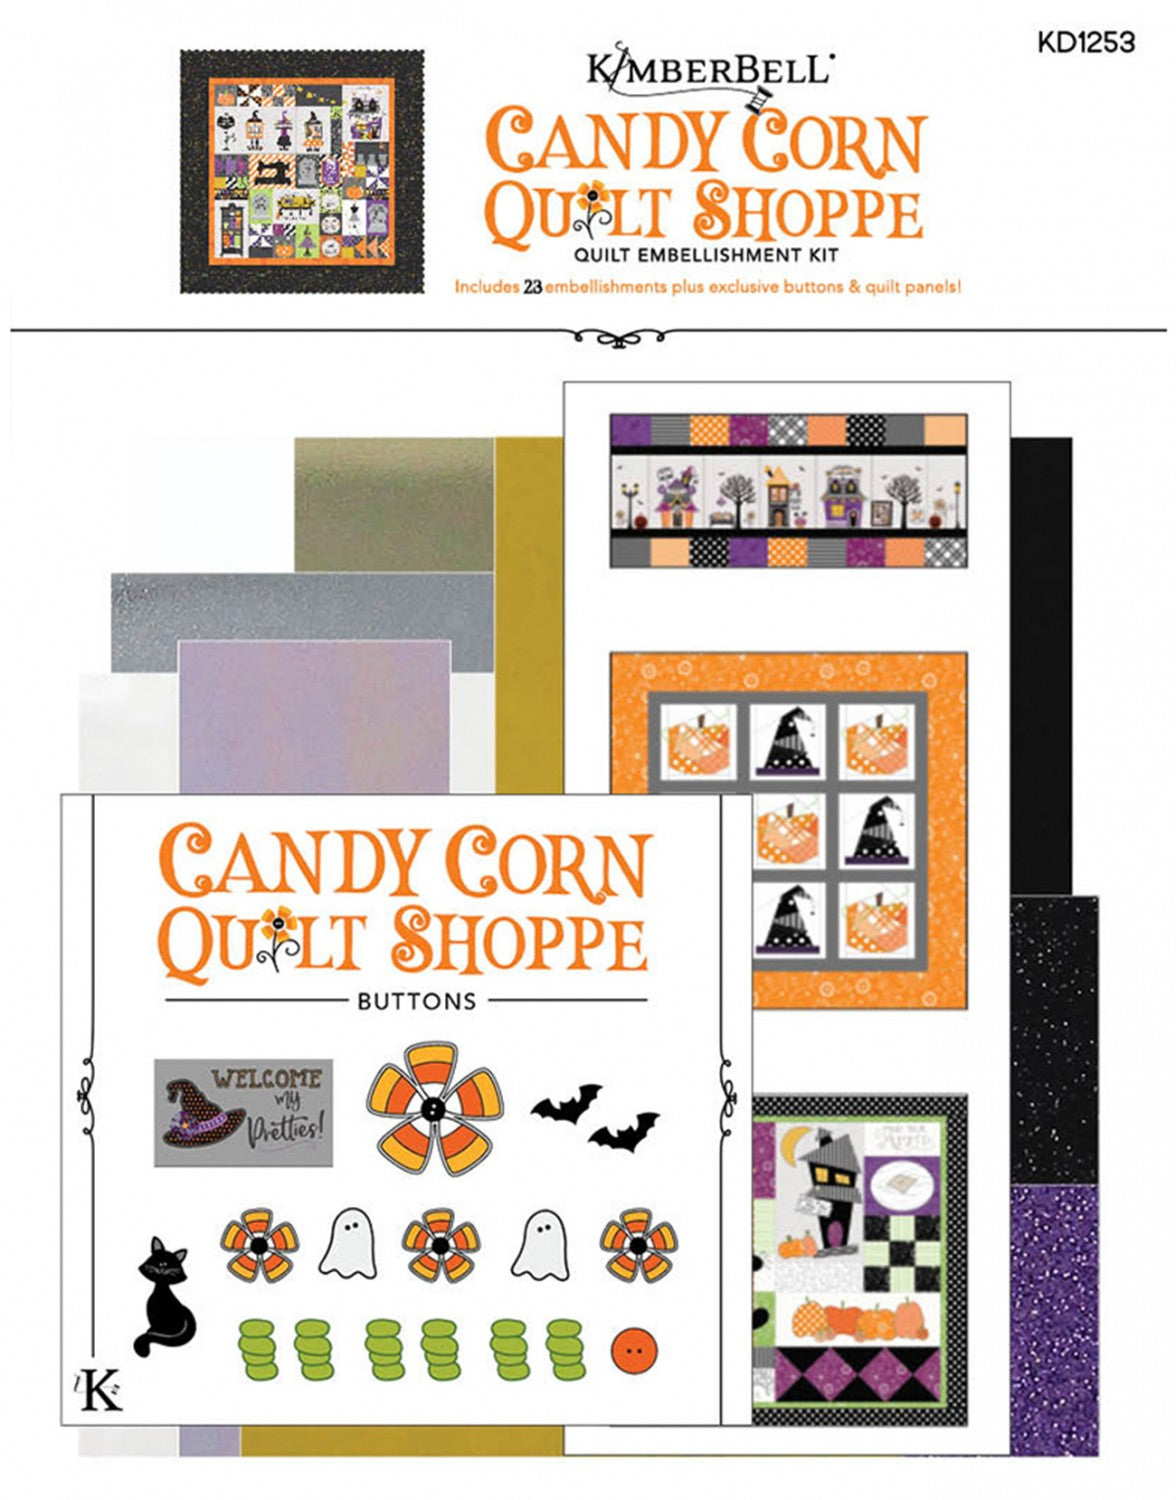 Candy Corn Quilt Shoppe: Bundle, Embellishment Kit, Pattern